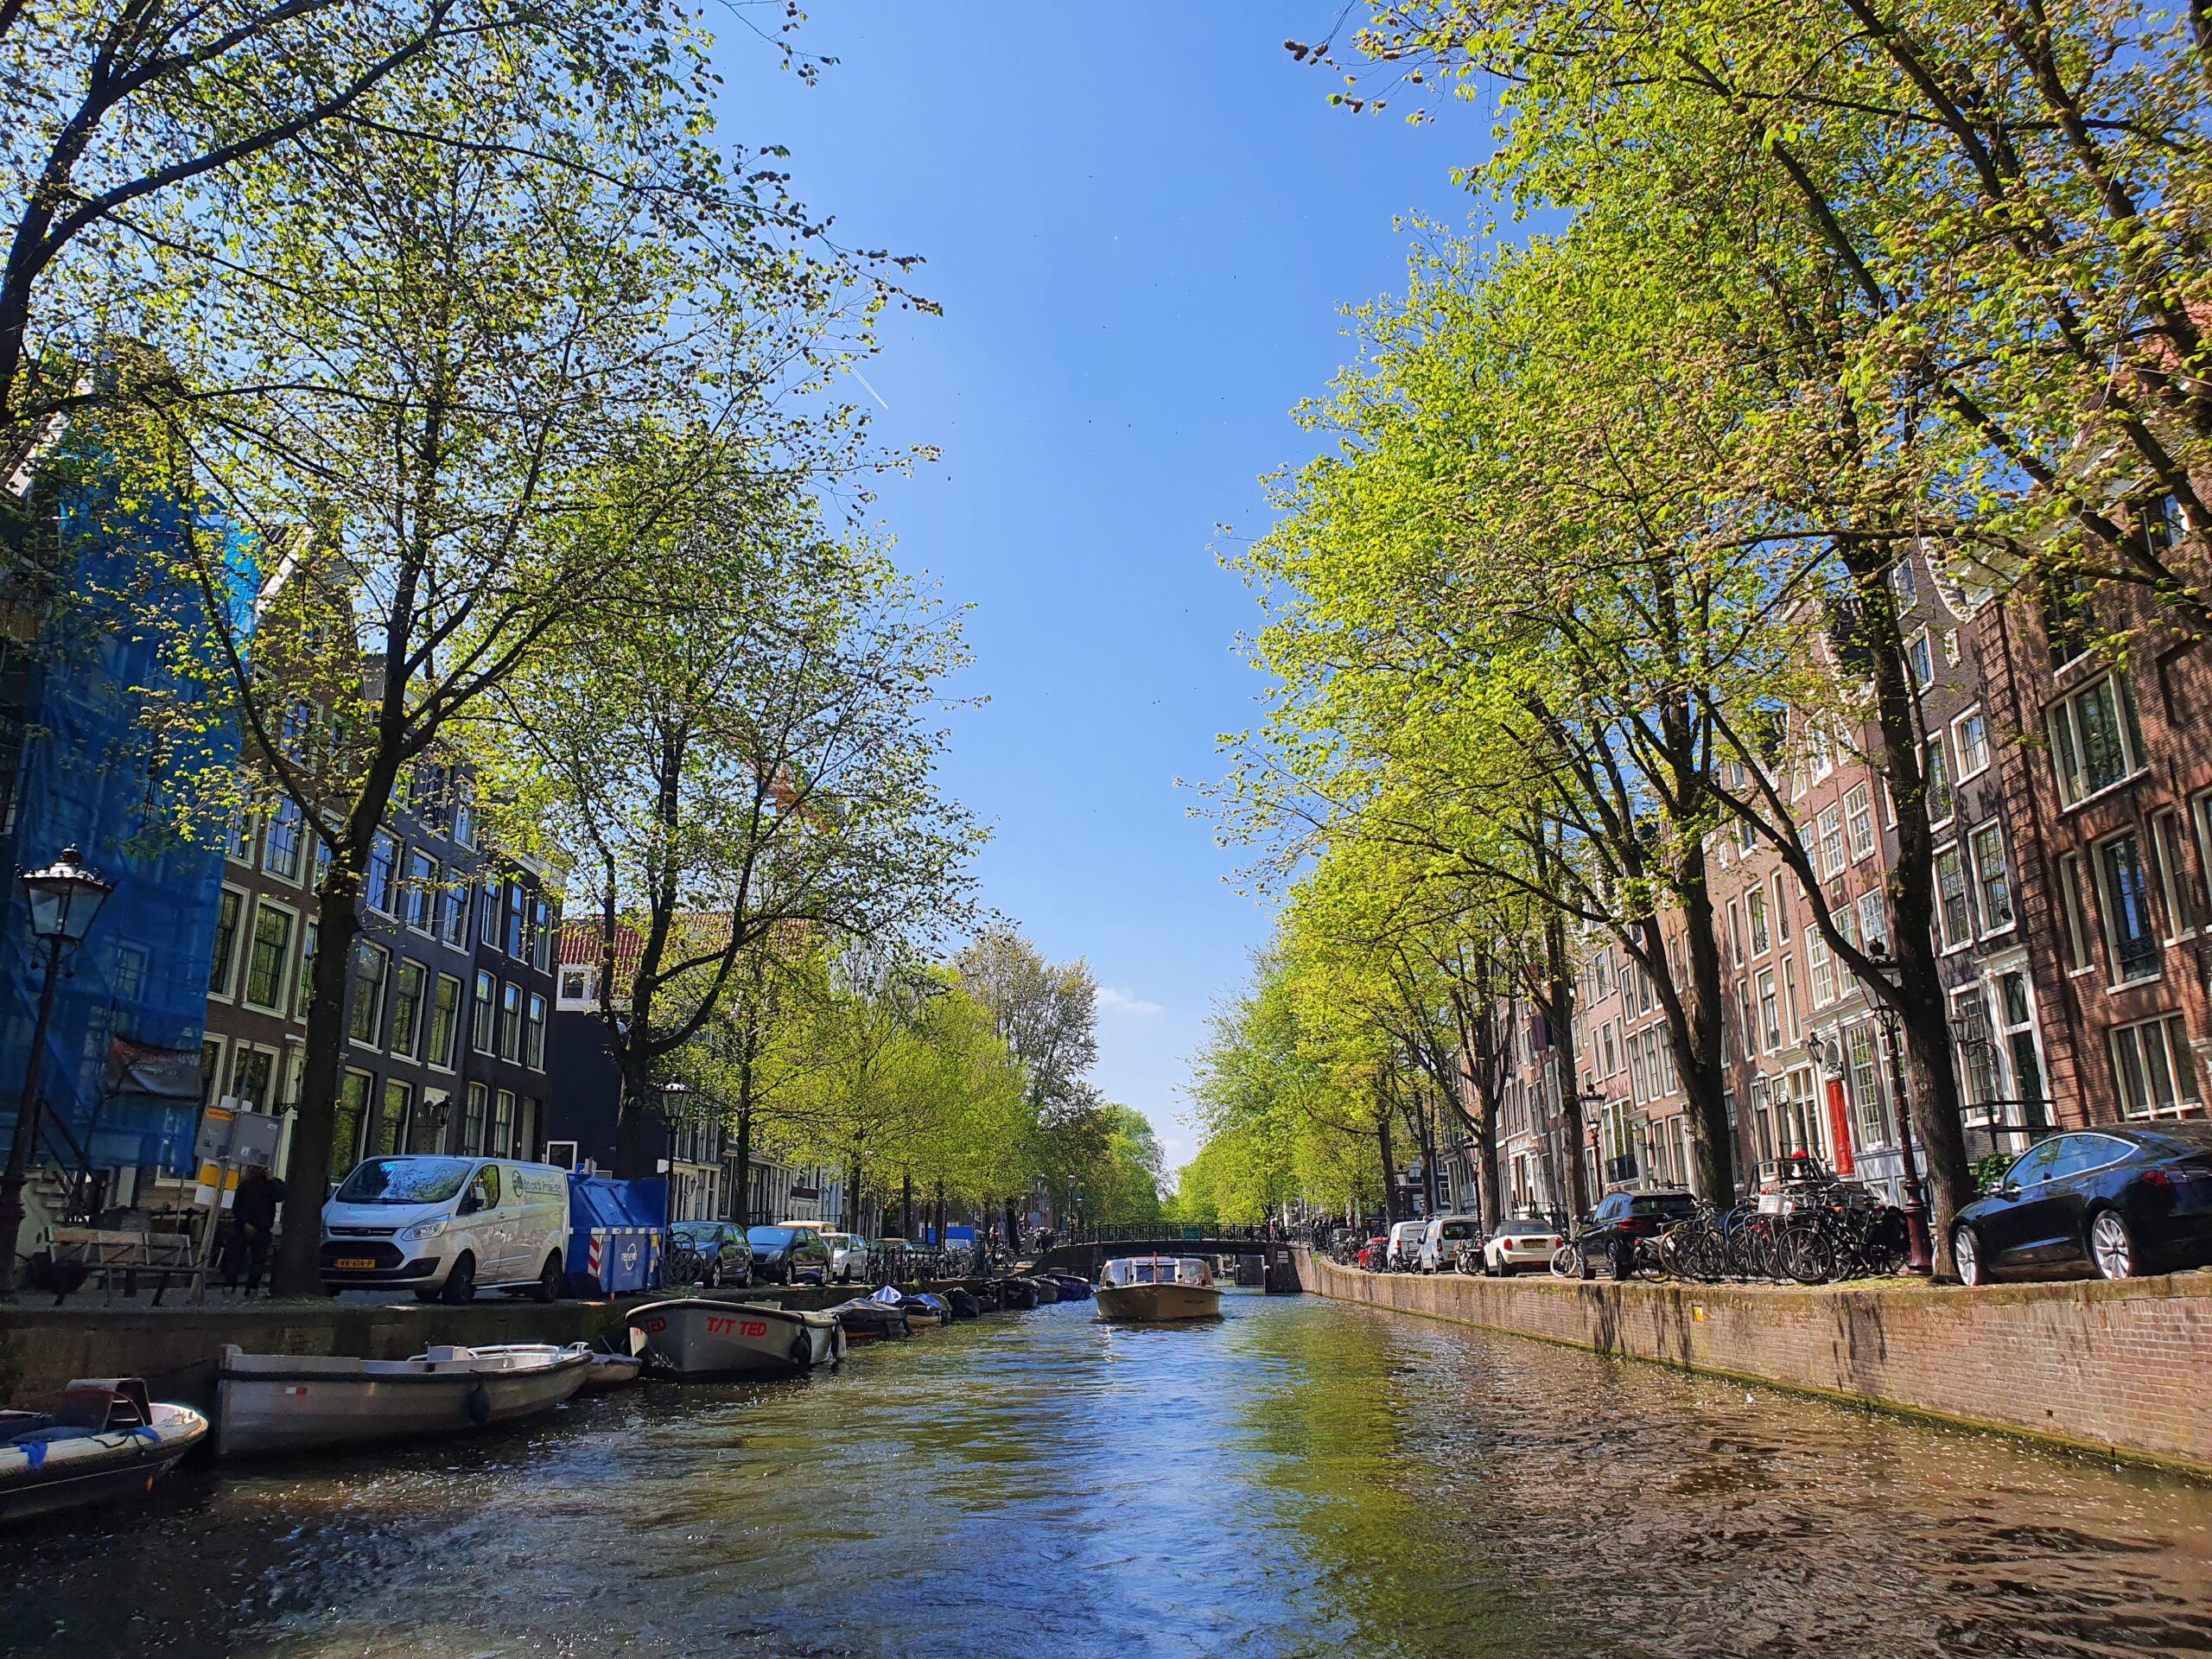 Rejs po kanałach Amsterdamu